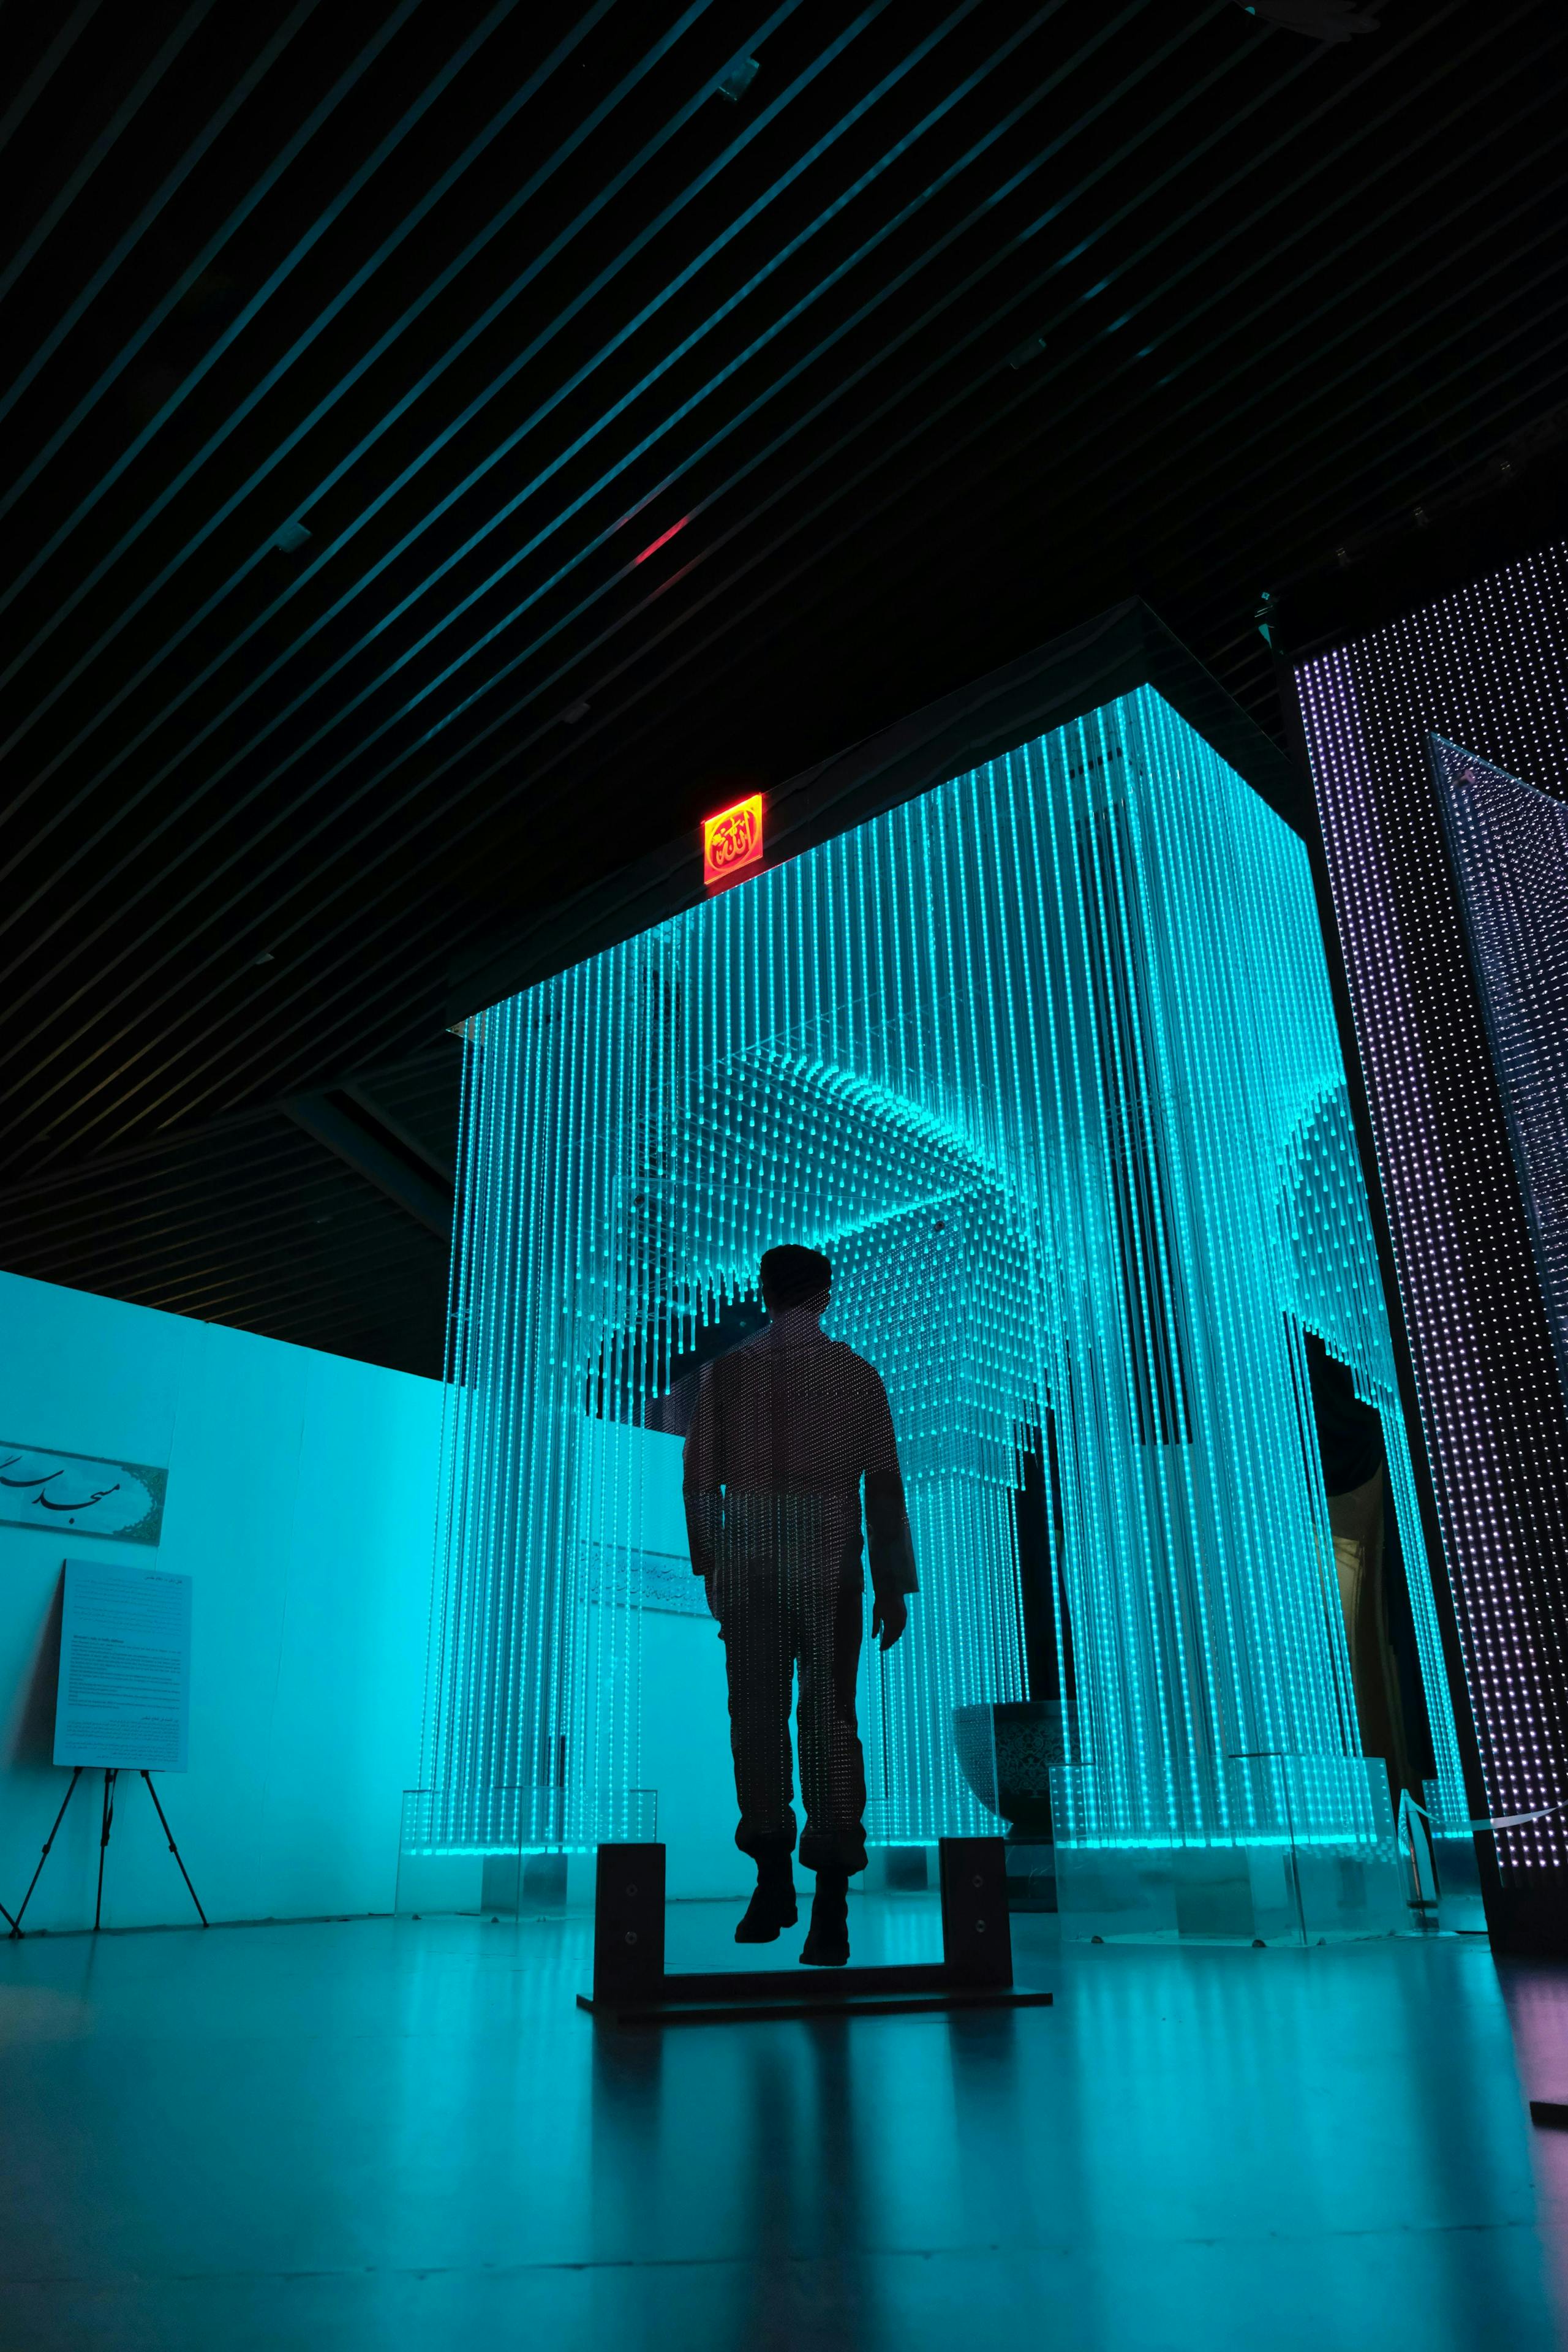 Man standing in an art display lit in blue light